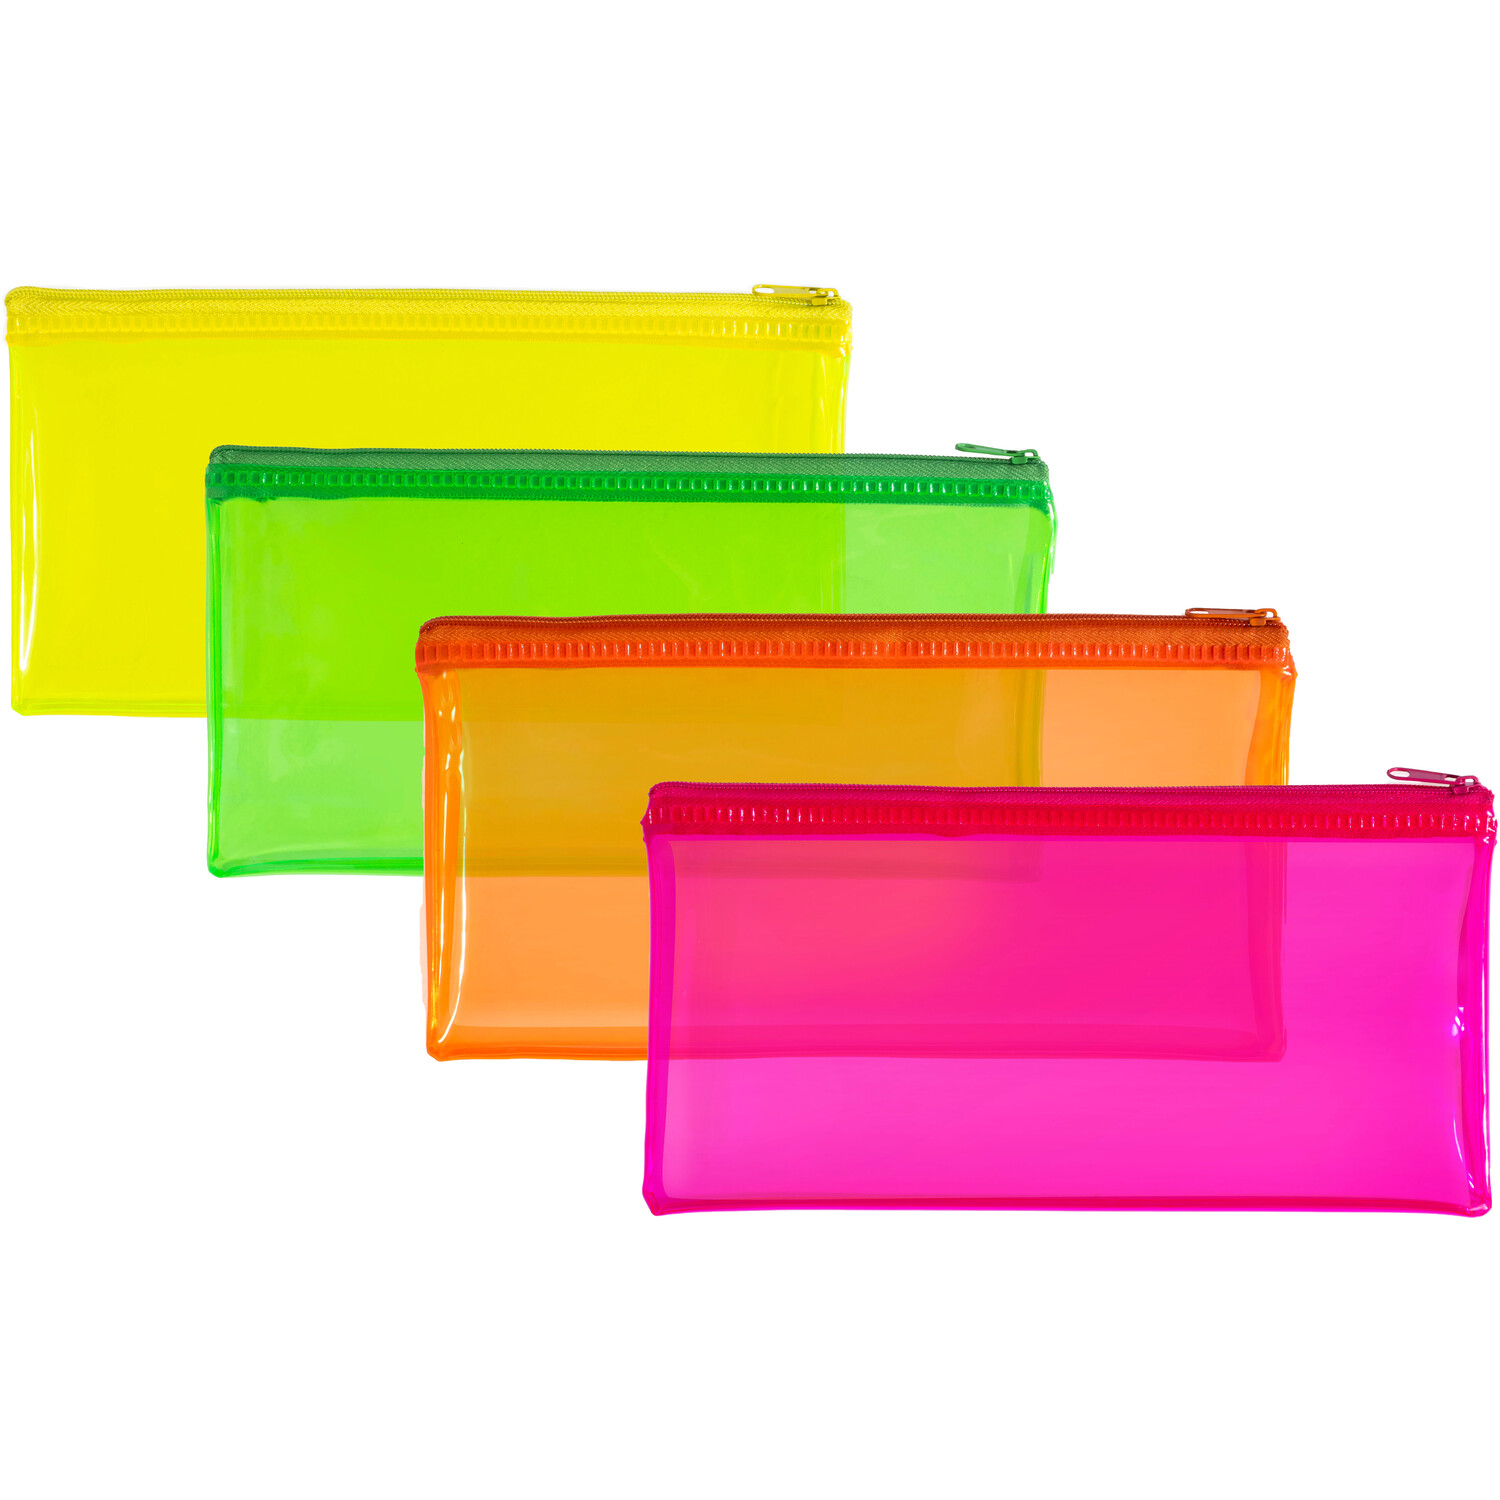 Rainbow Zip Bag  - Small Image 1